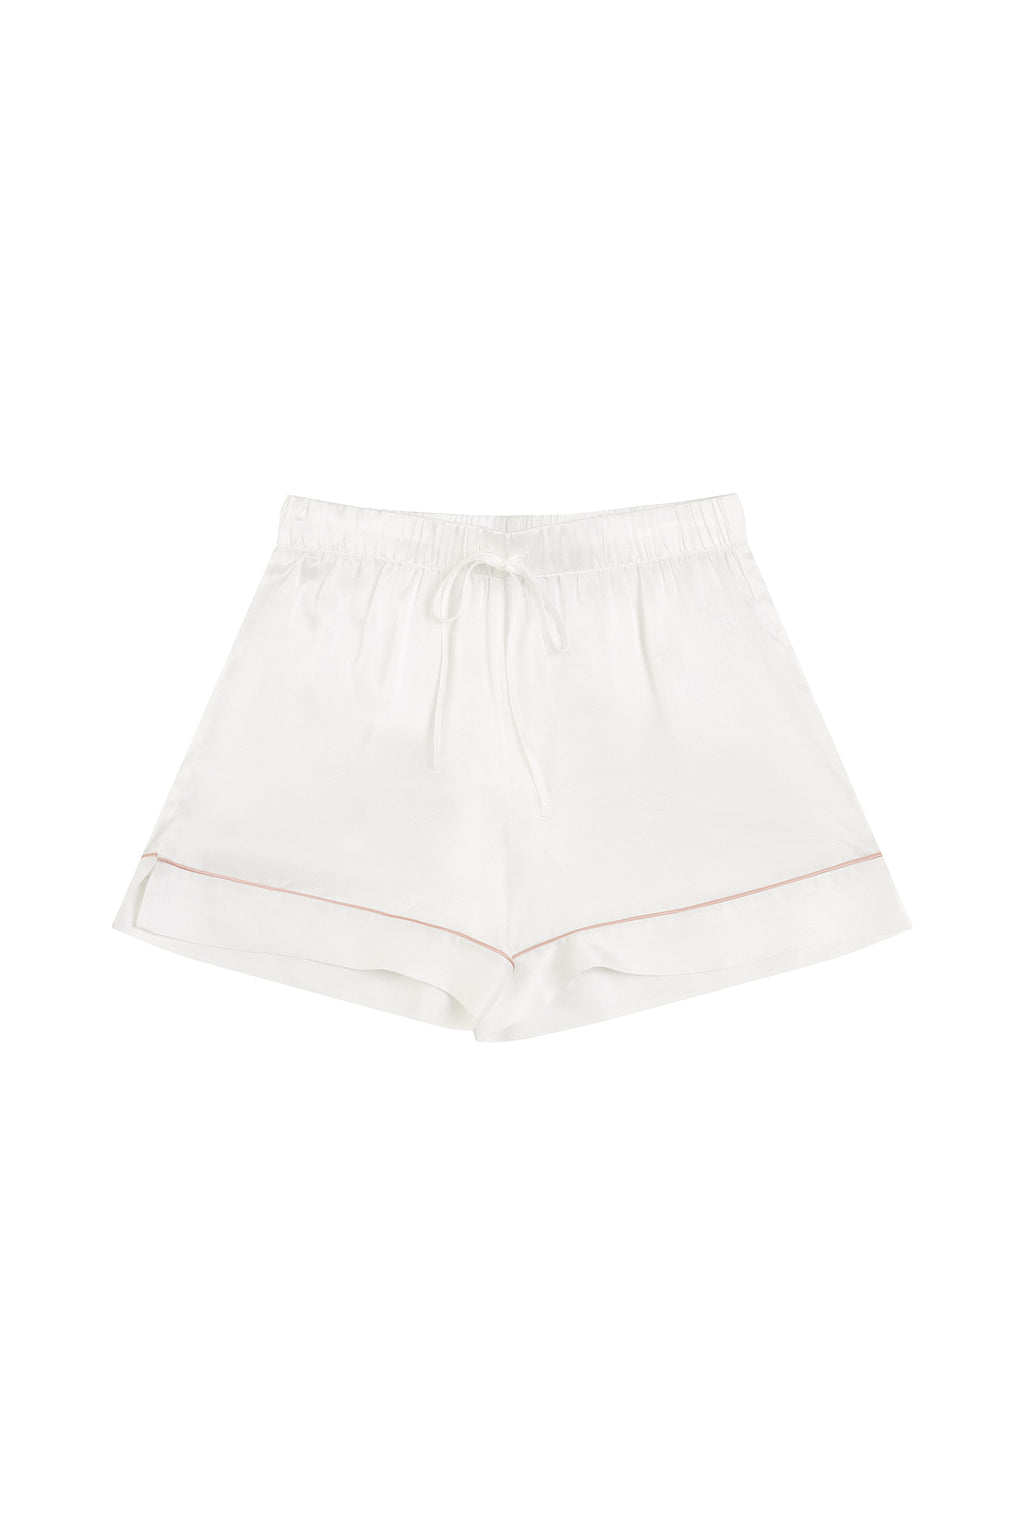 Silk Shorts in Parisian White